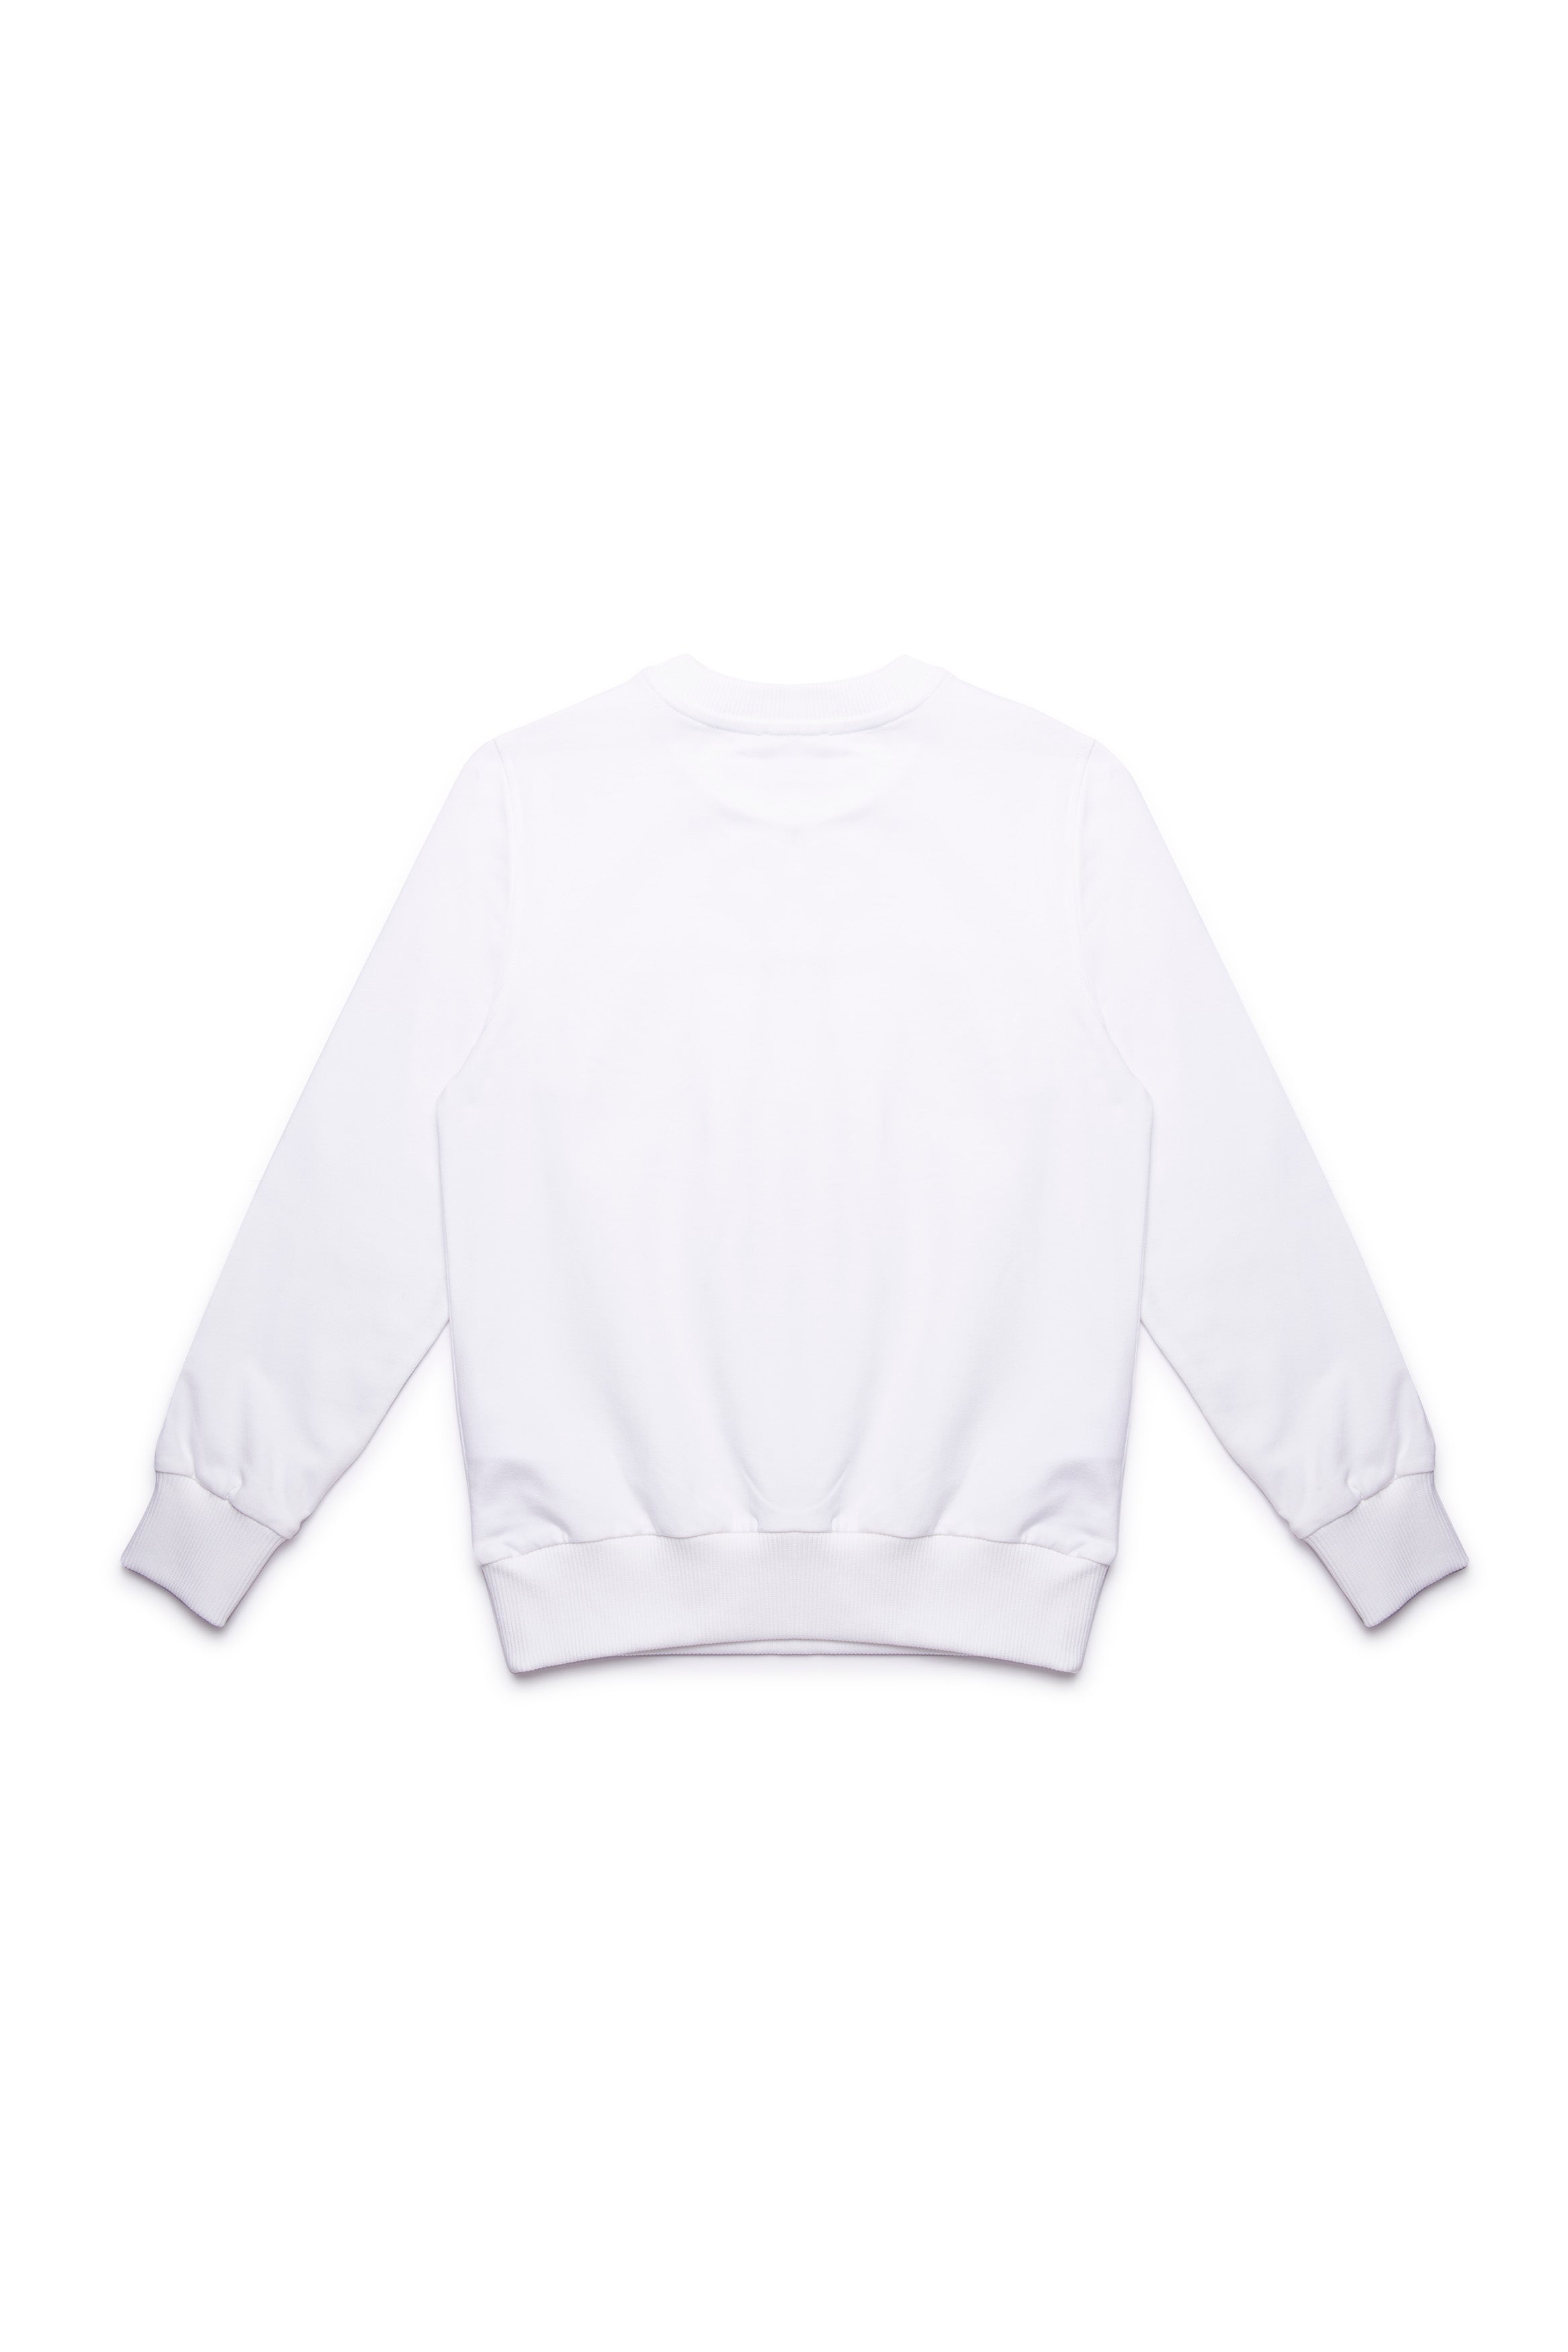 Boys White Printing Cotton Sweatershirt